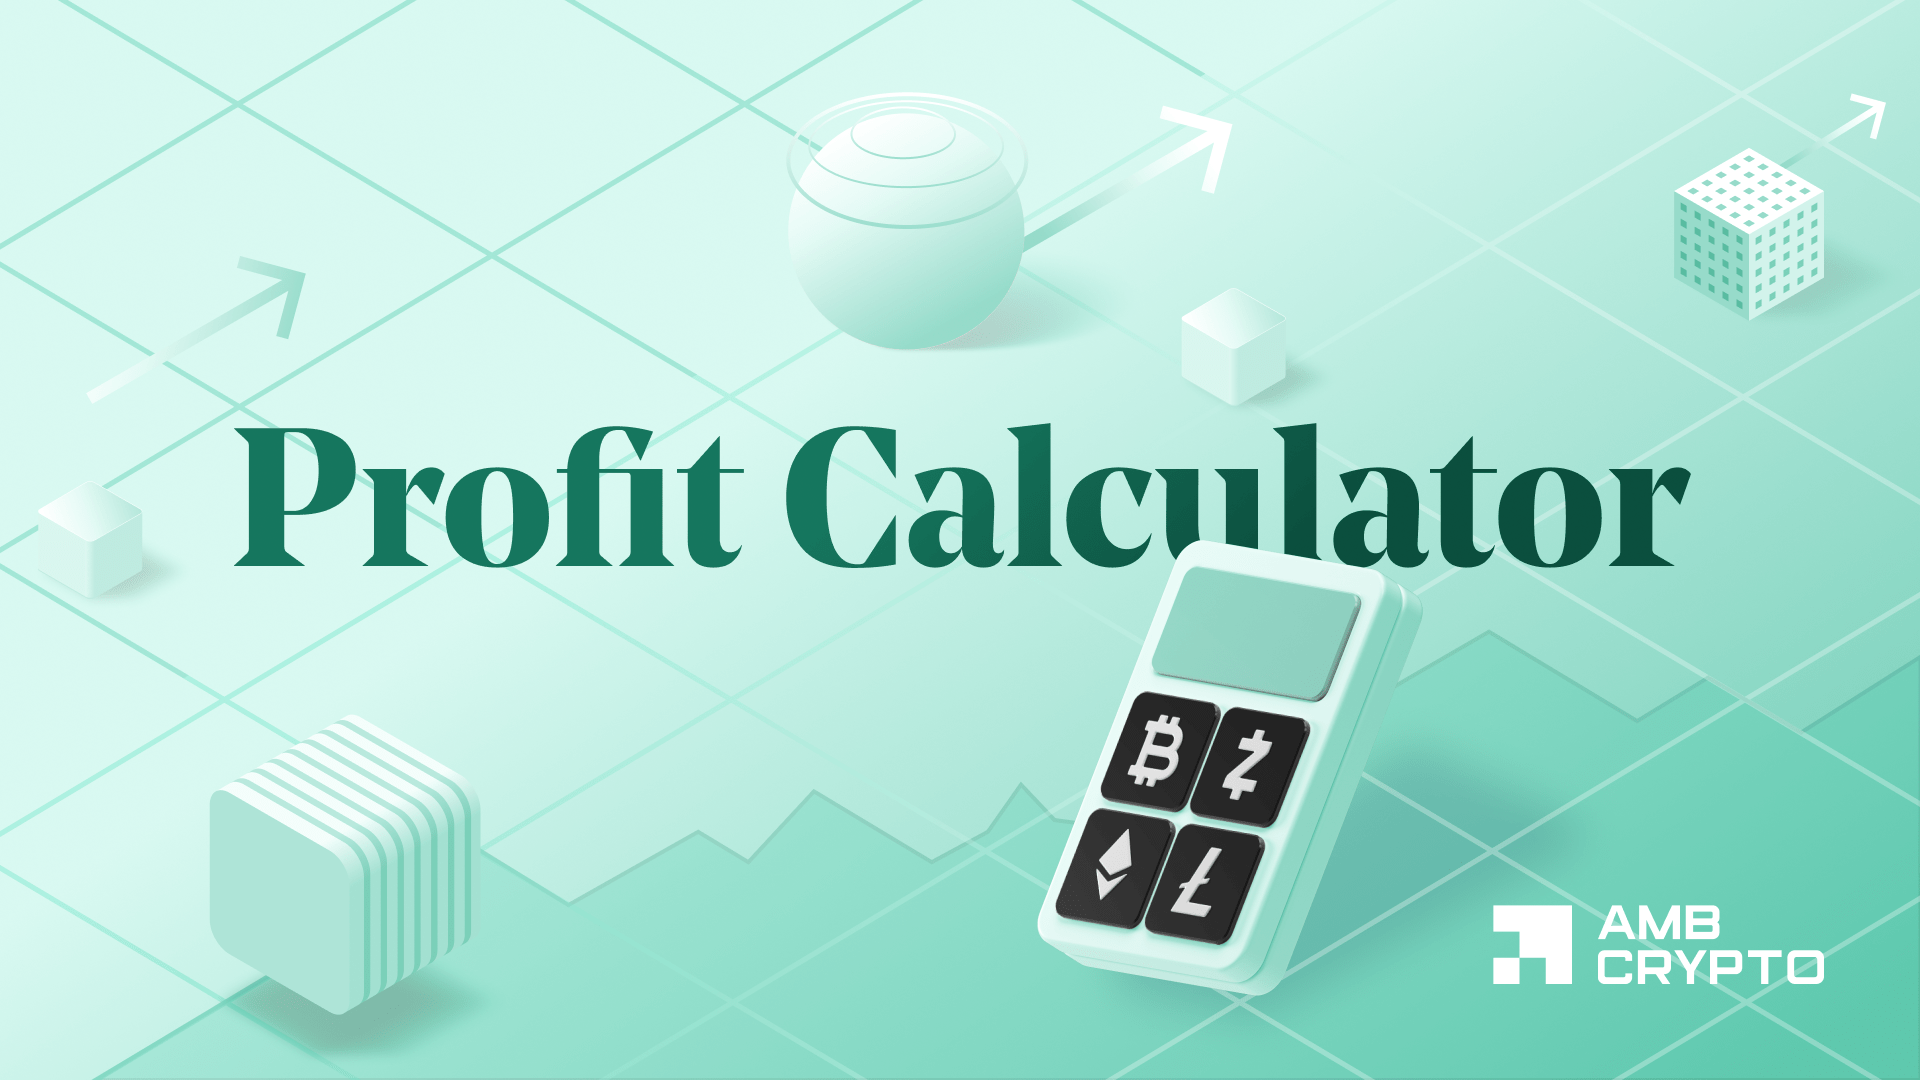 Litecoin (LTC) mining profitability calculator